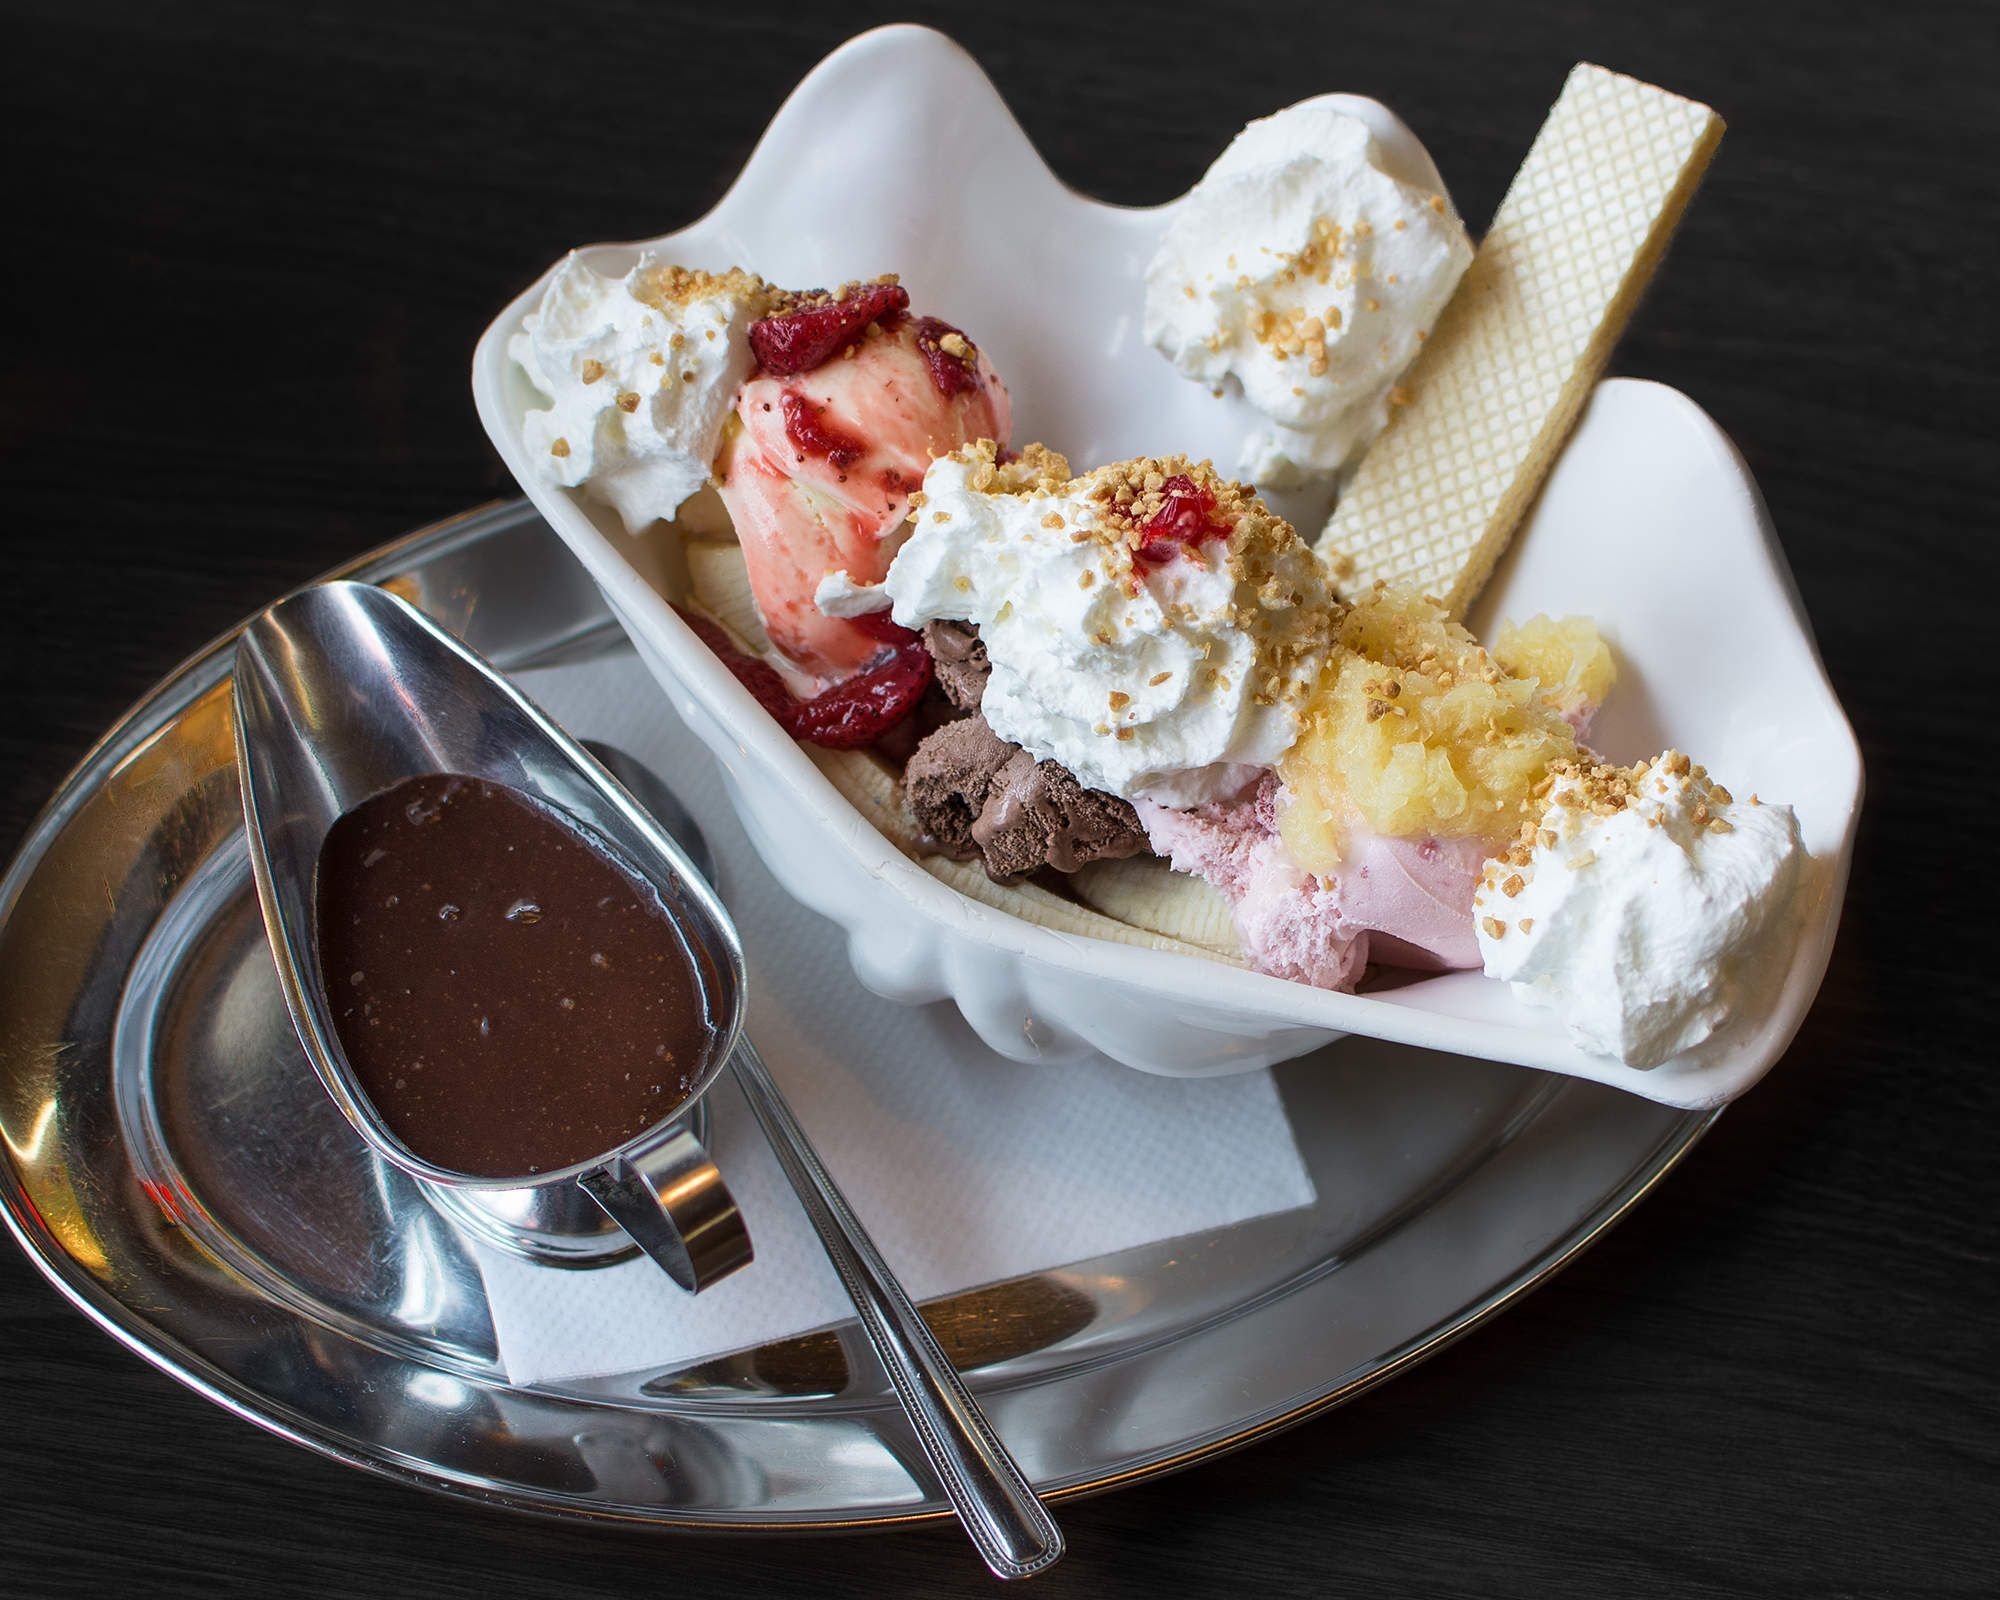 Dessert dishes. Мороженое в ресторане. Французское мороженое. Красивое мороженое в кафе. Красивое мороженое.